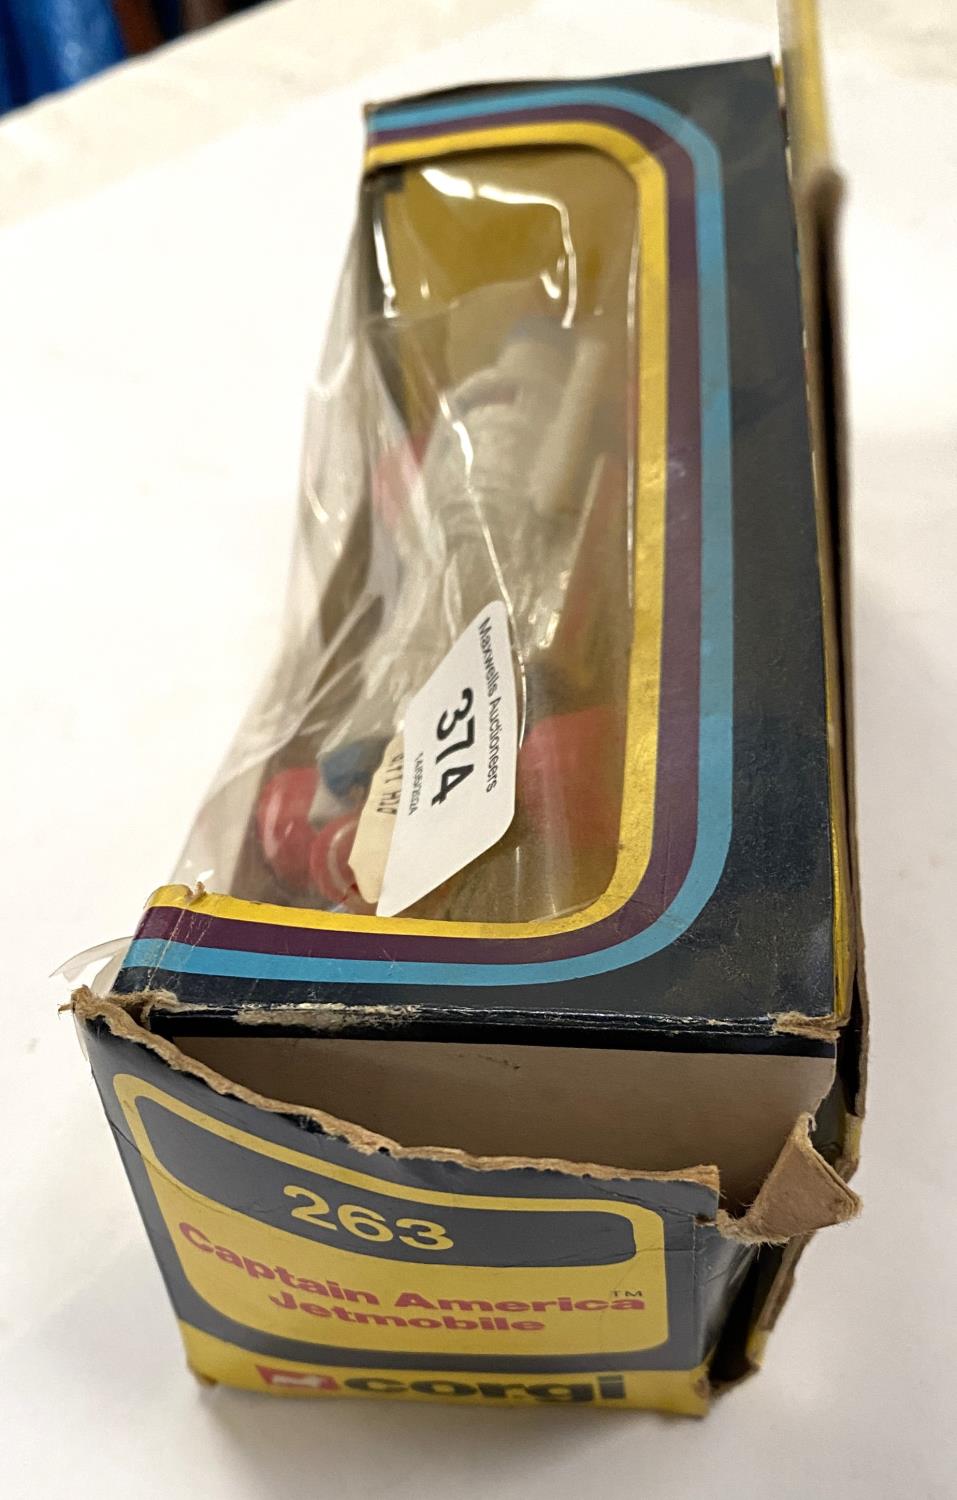 Corgi Marvel Captain America Jetmobile 263 boxed (box worn) - Image 3 of 4